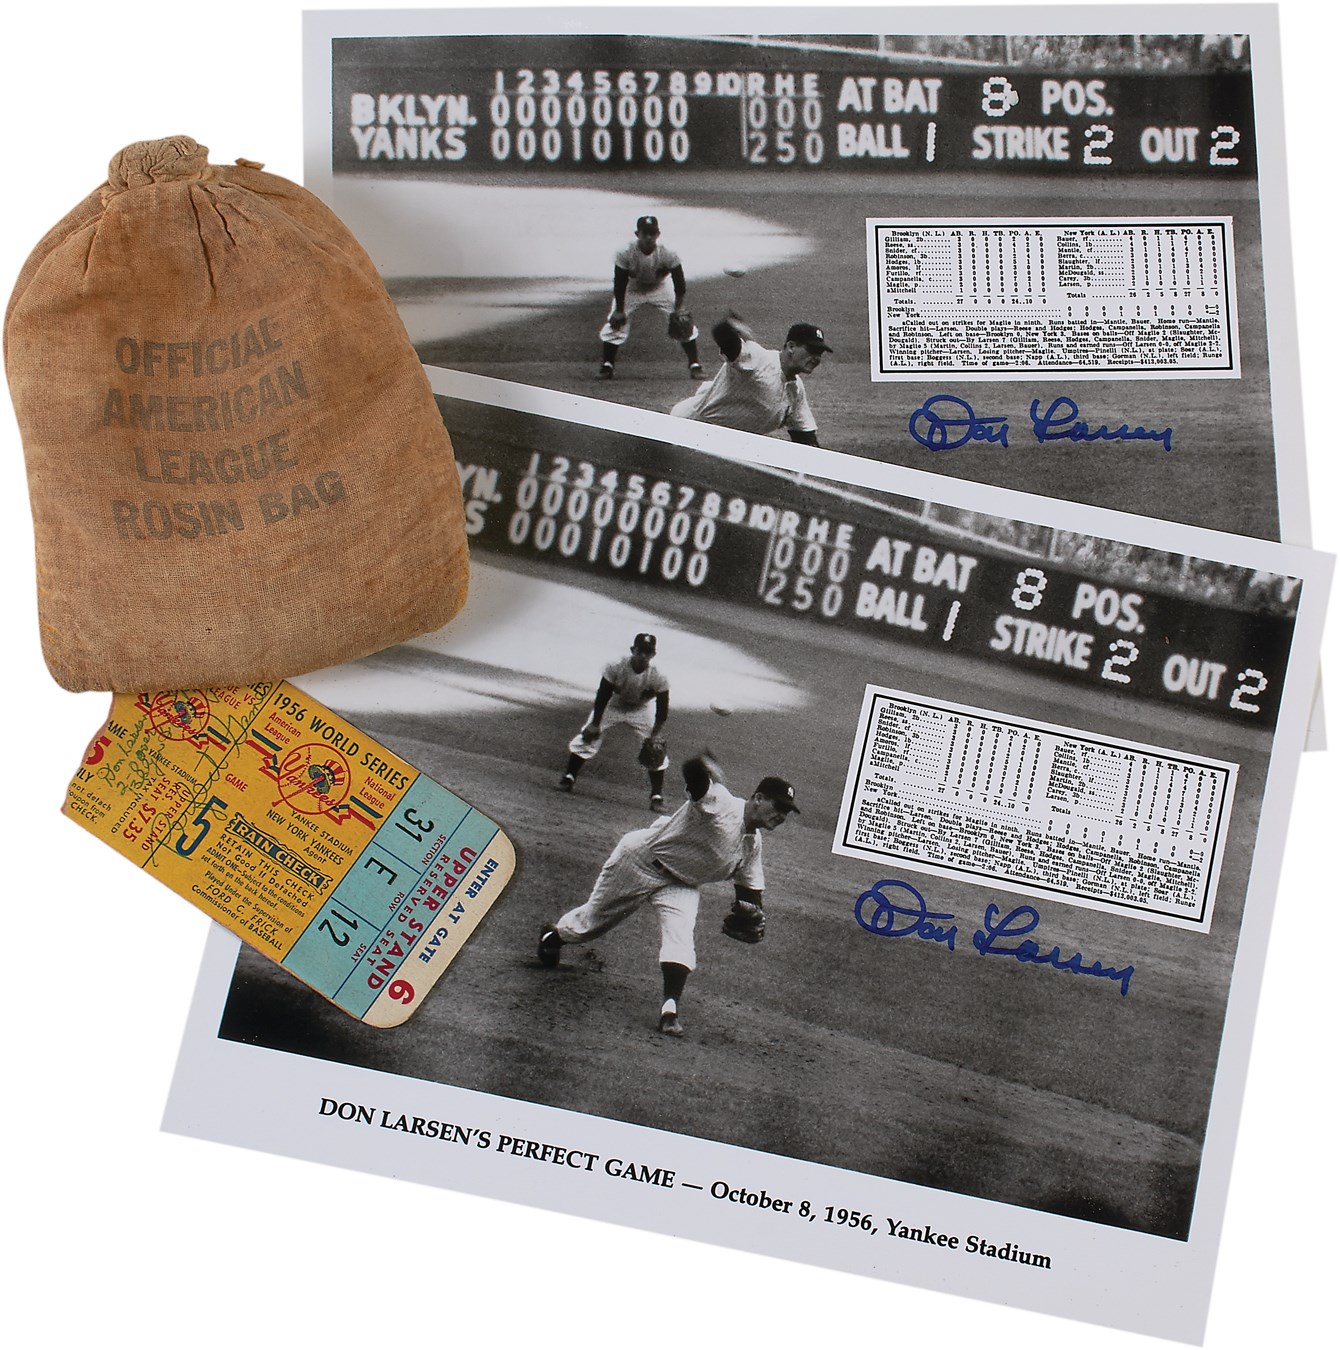 NY Yankees, Giants & Mets - 1956 Don Larsen Perfect Game Rosin Bag